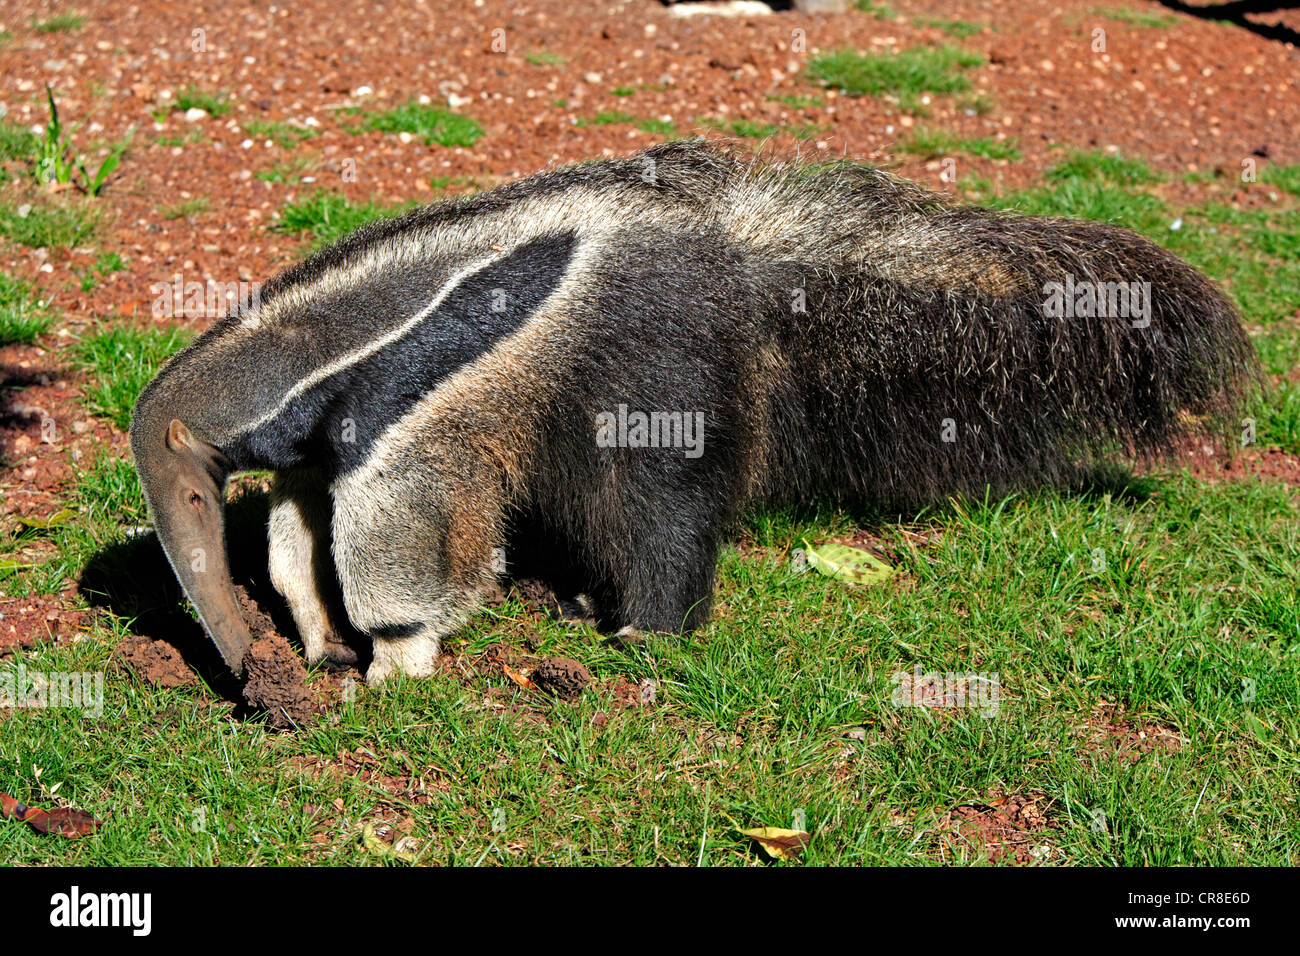 Giant Anteater (Myrmecophaga tridactyla), Adulto, alimentando ad una termite mound, Pantanal, Brasile, Sud America Foto Stock